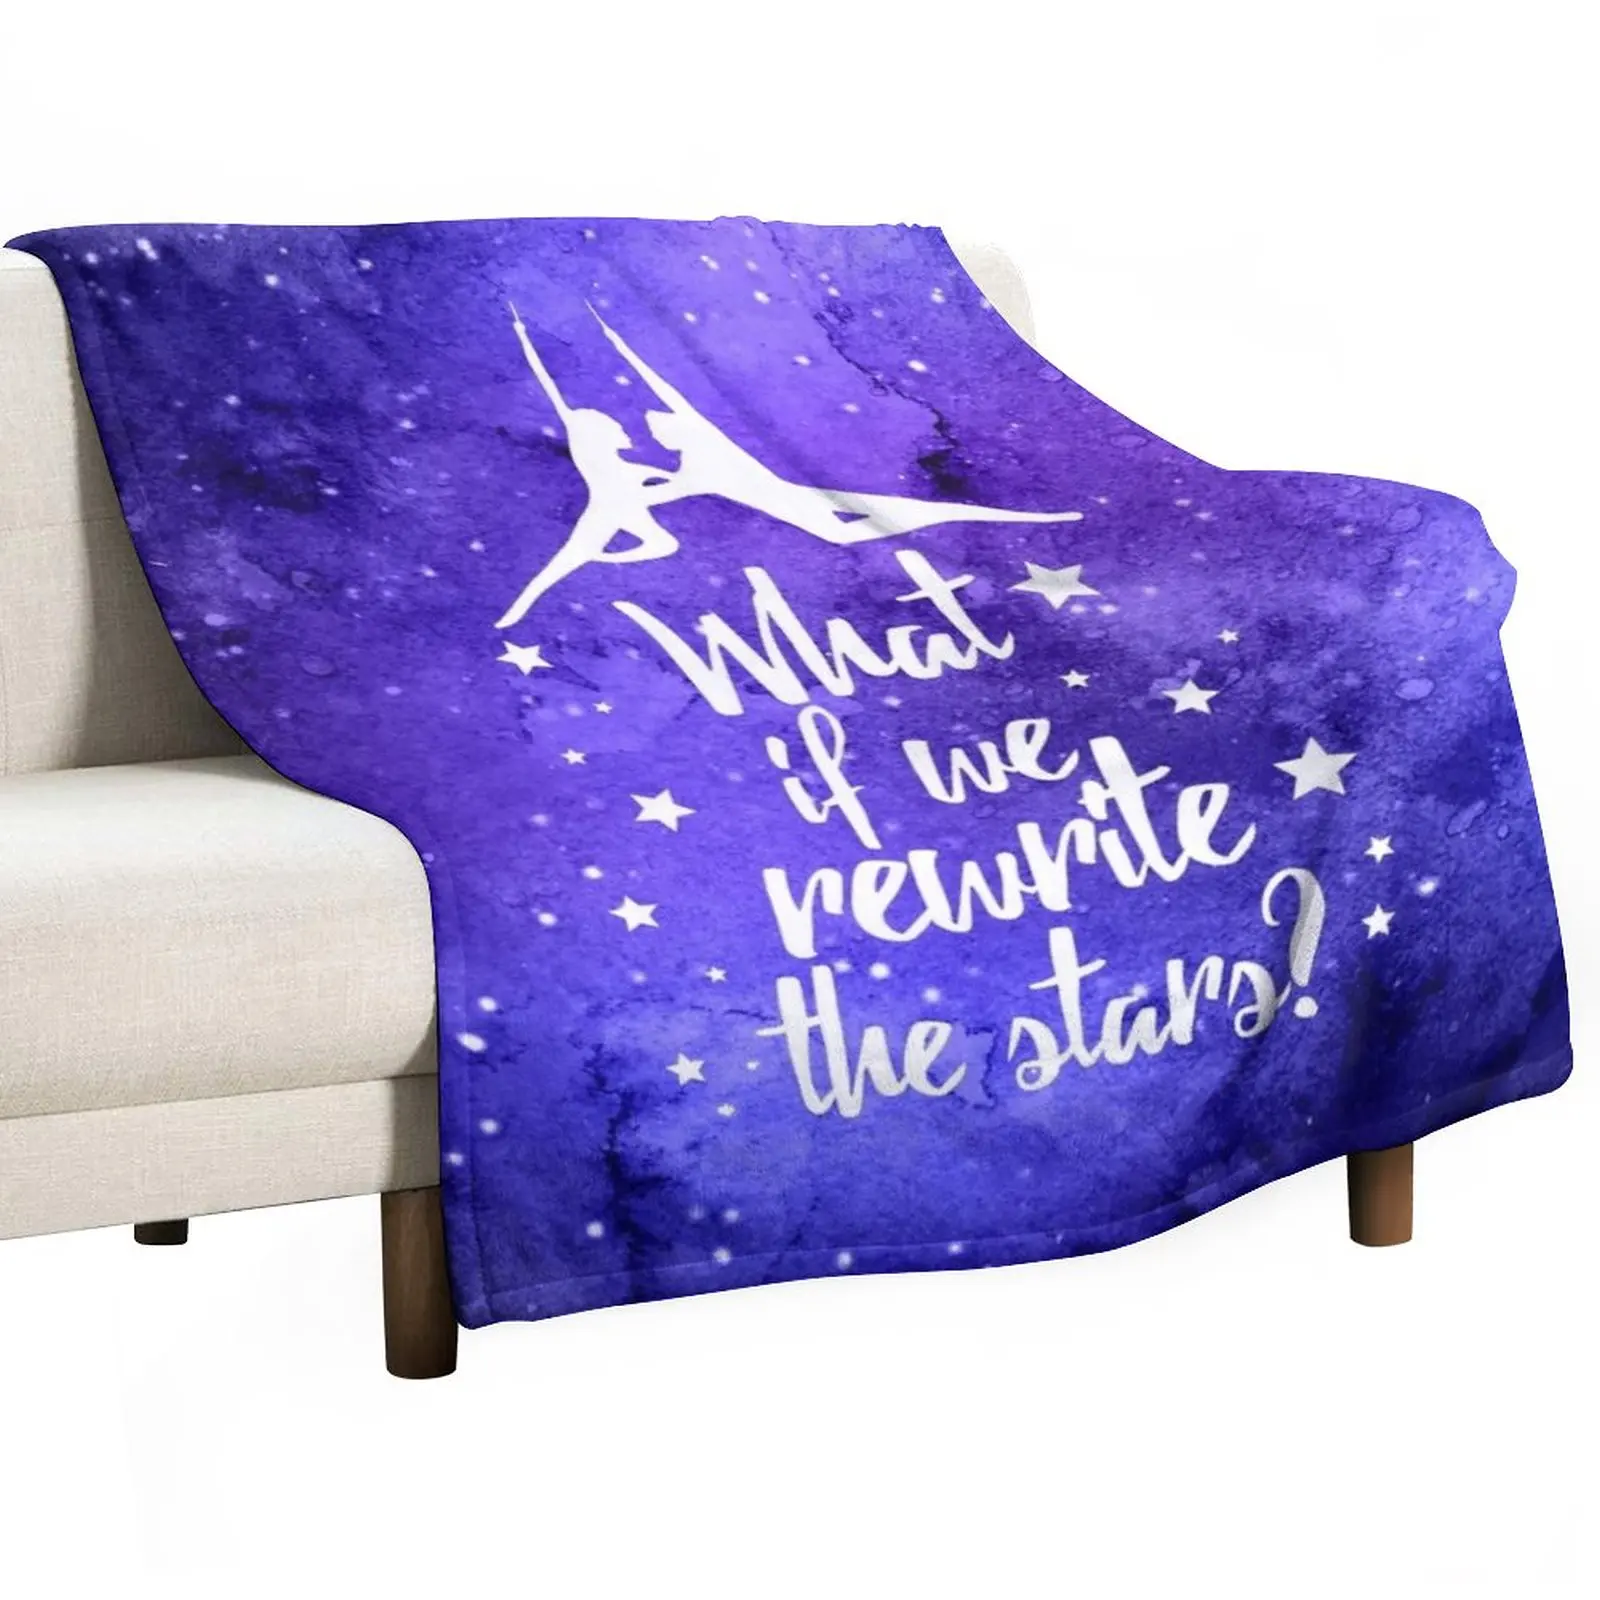 

Greatest Showman Rewrite the Stars Watercolour Galaxy Throw Blanket Luxury St Blanket Plaid on the sofa